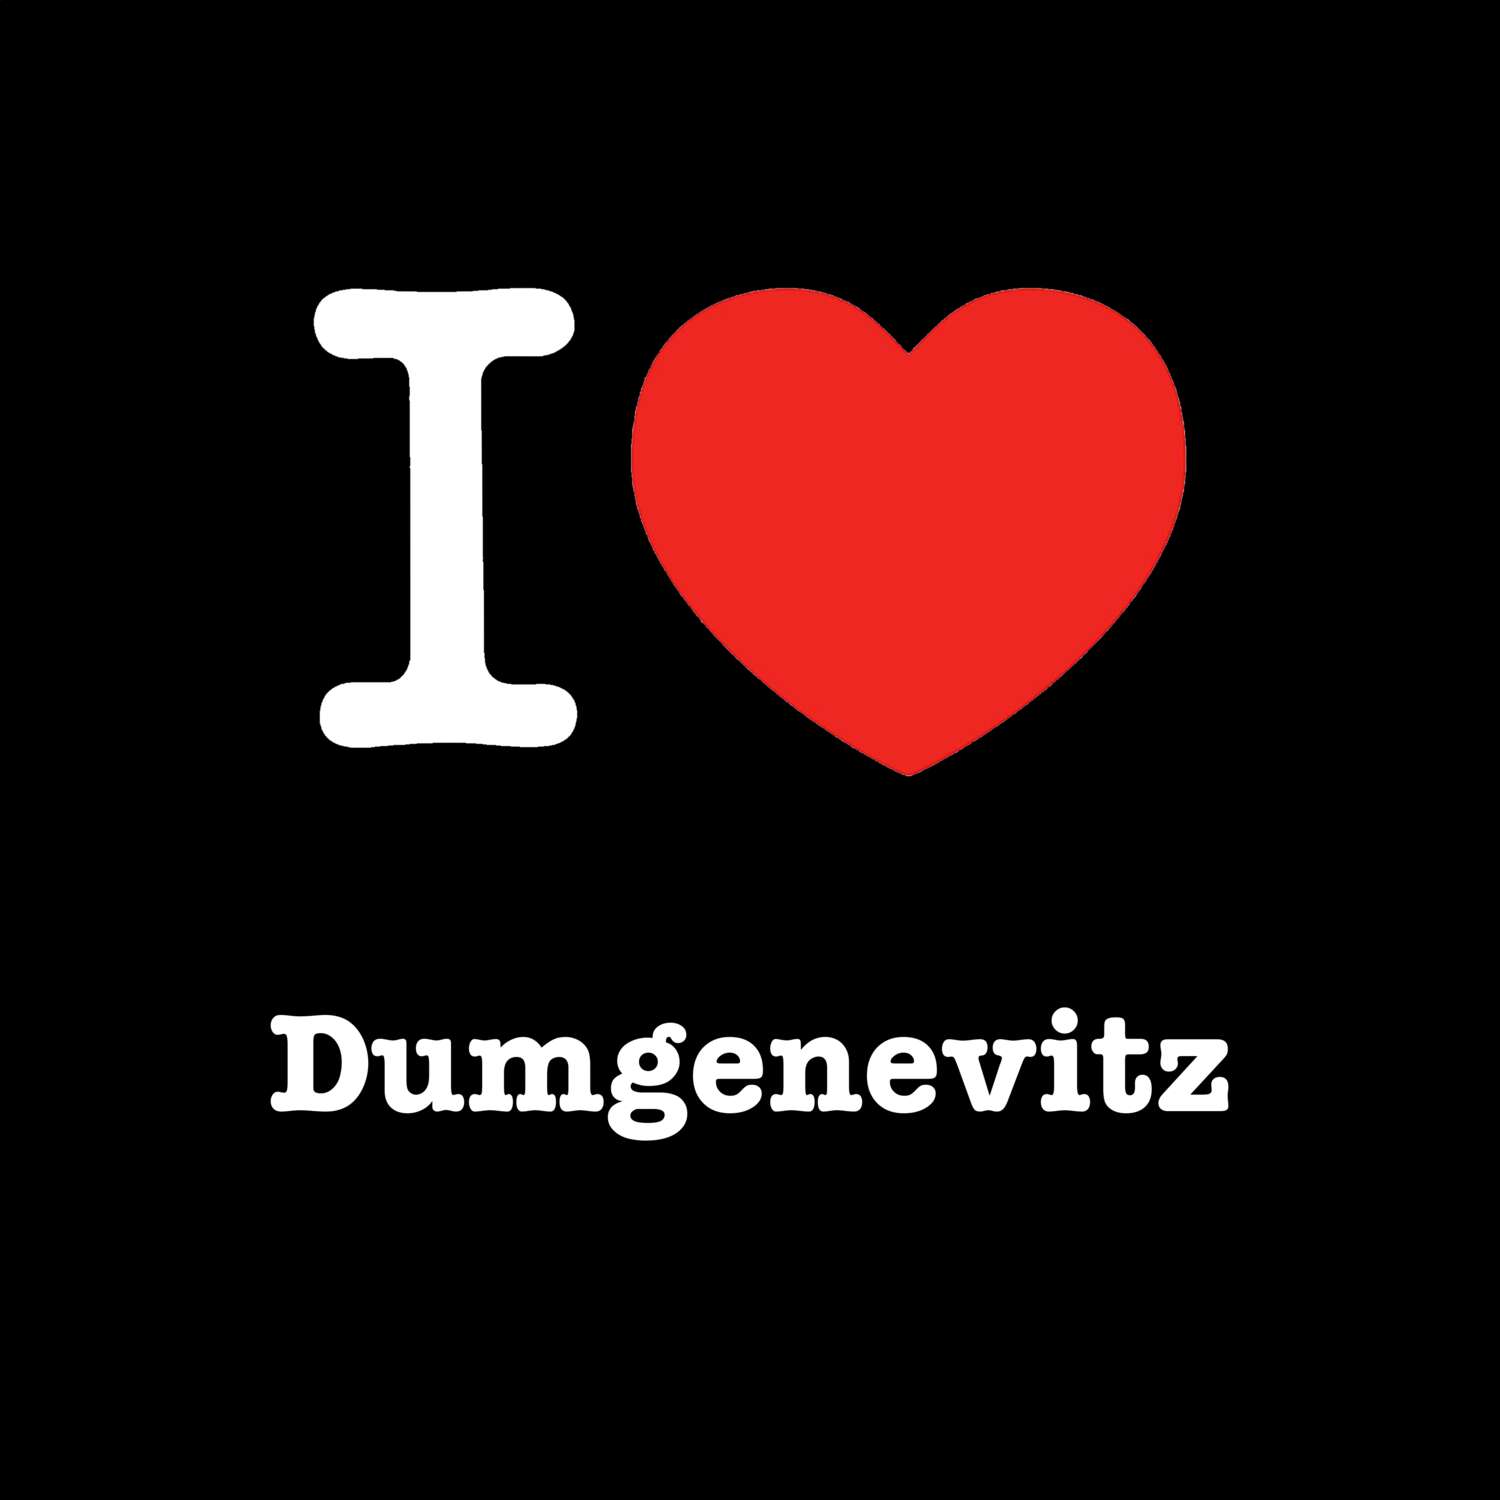 Dumgenevitz T-Shirt »I love«